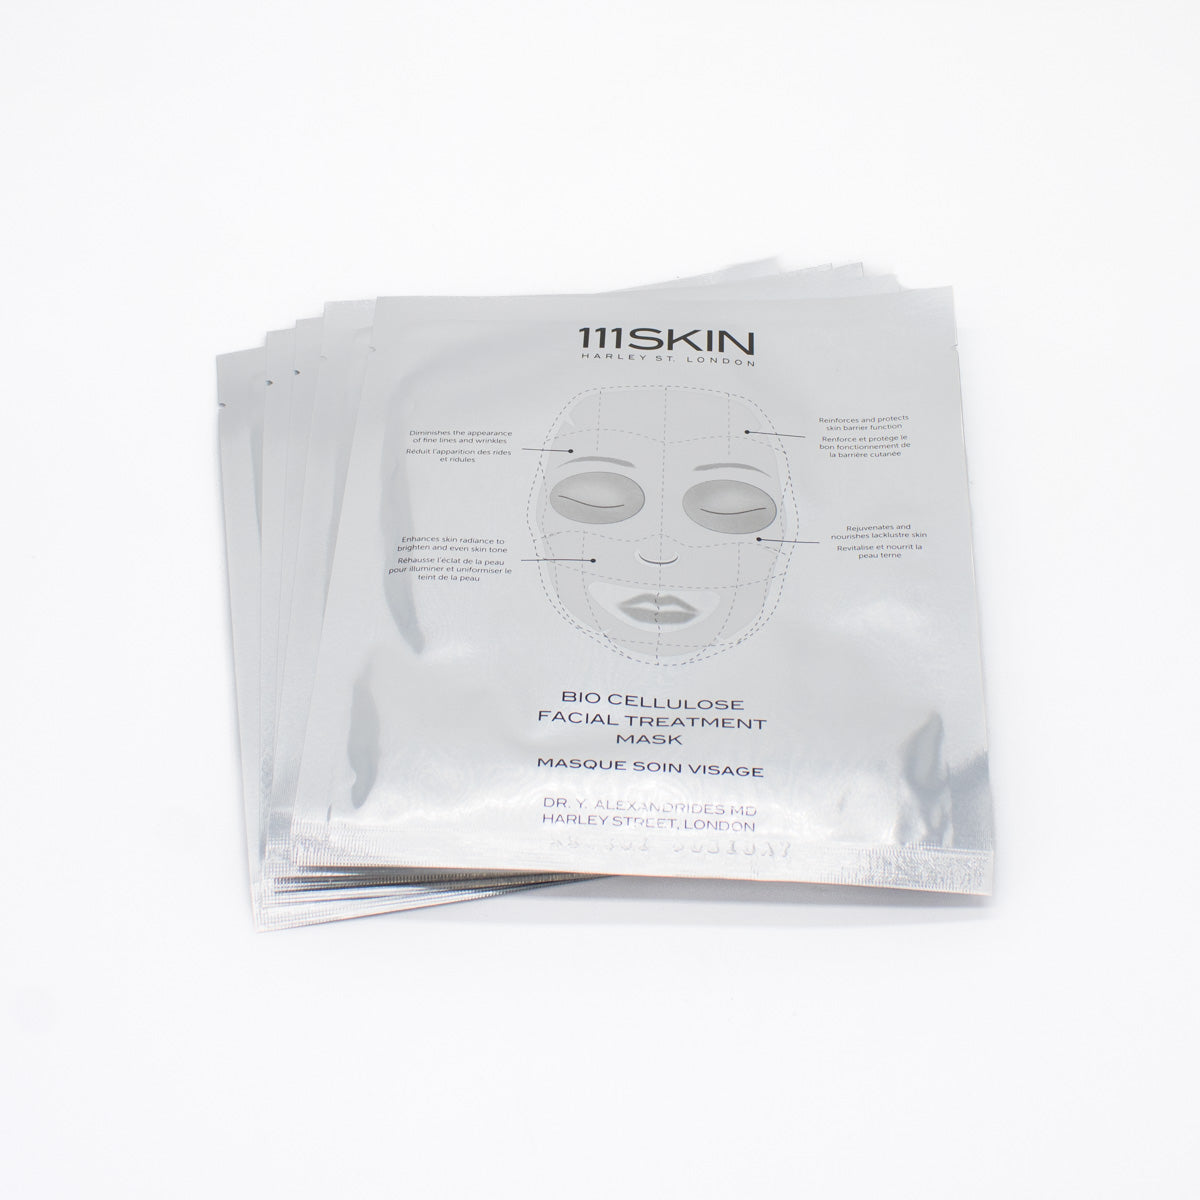 111SKIN  Bio Cellulose Facial Treatment Mask 5 x 0.78oz - Imperfect Box